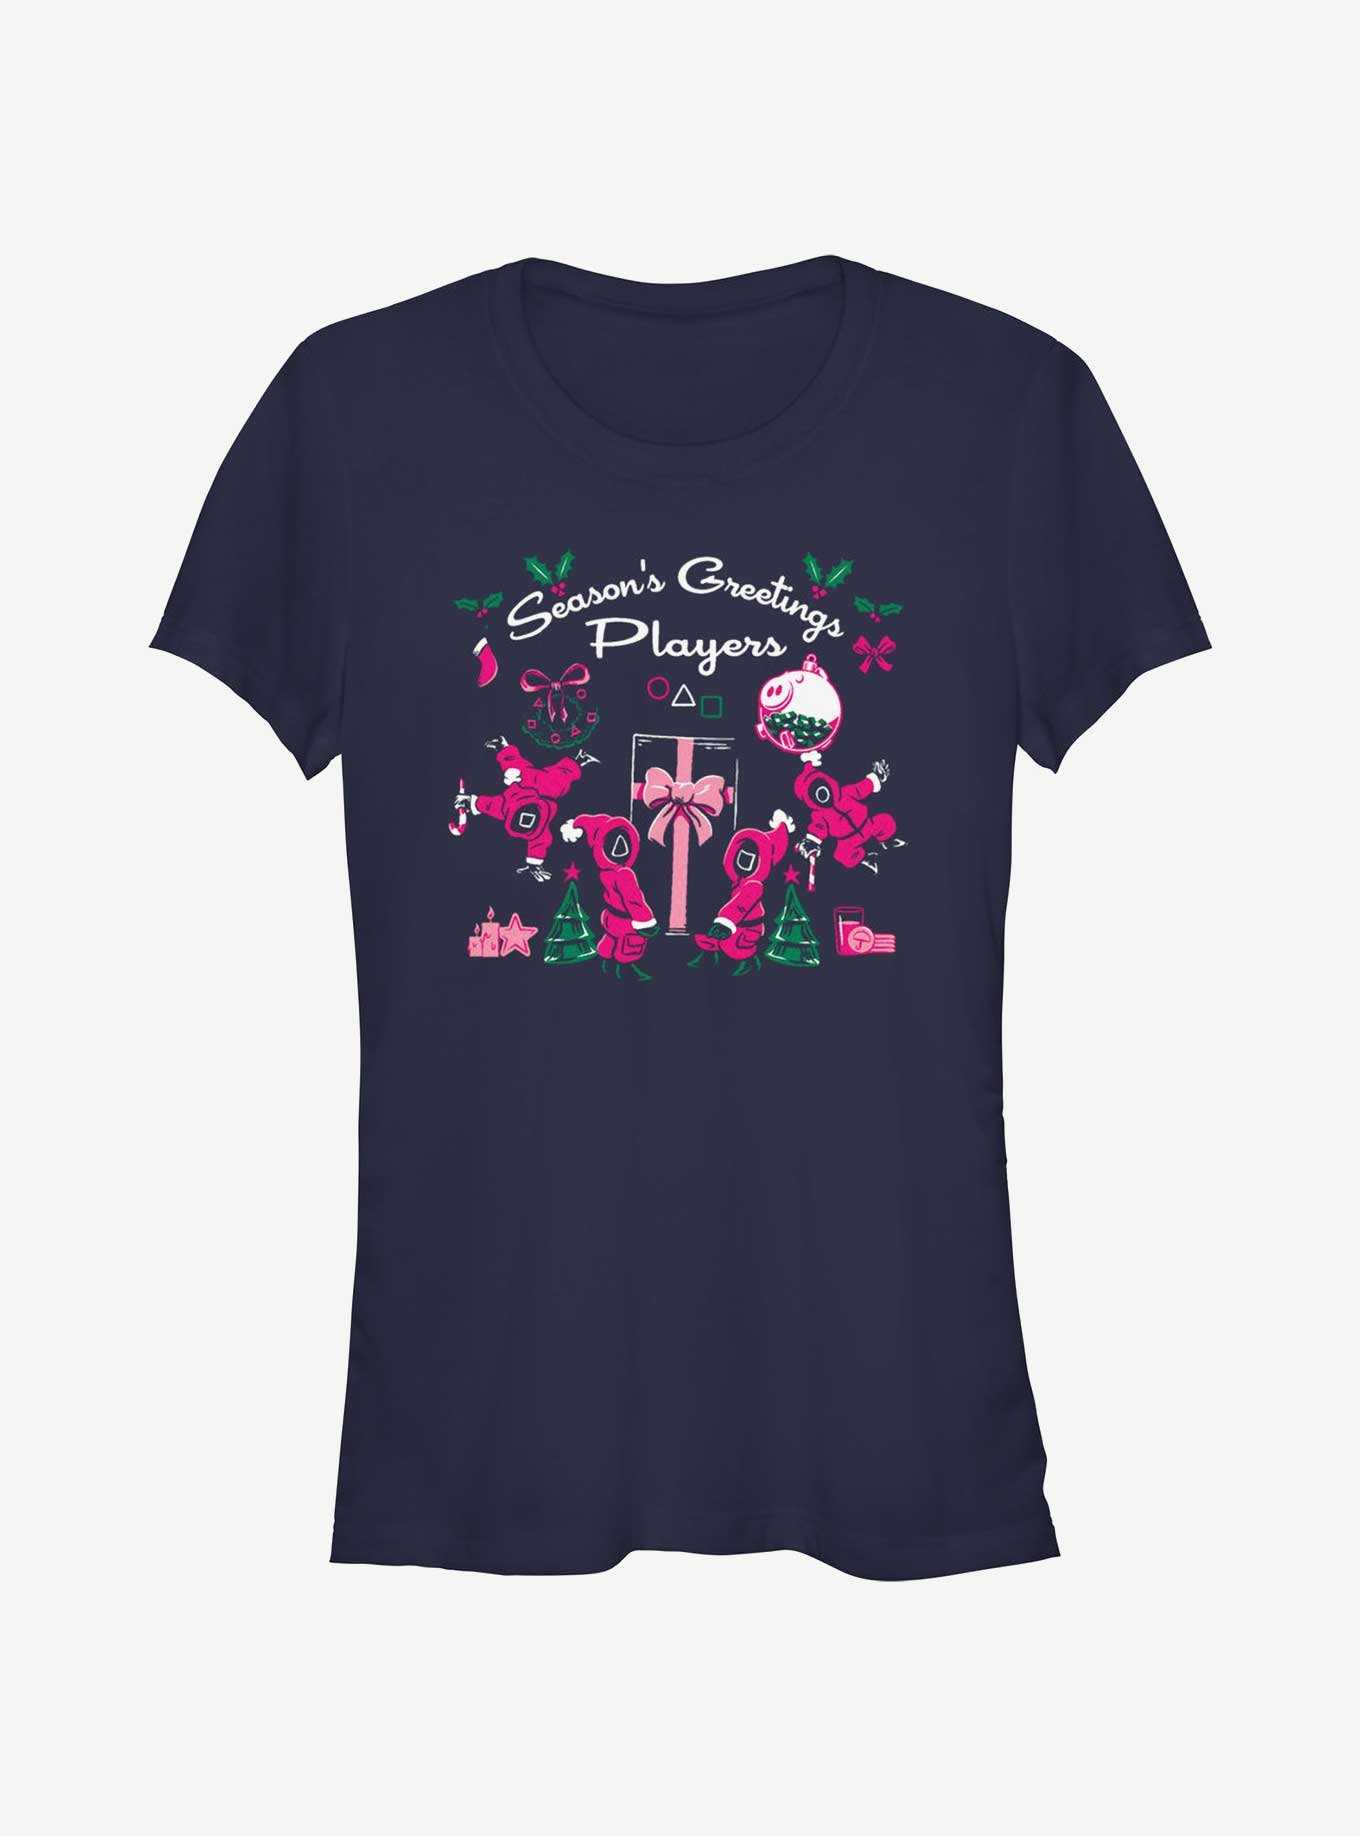 Squid Game Season's Greetings Players Girls T-Shirt, , hi-res